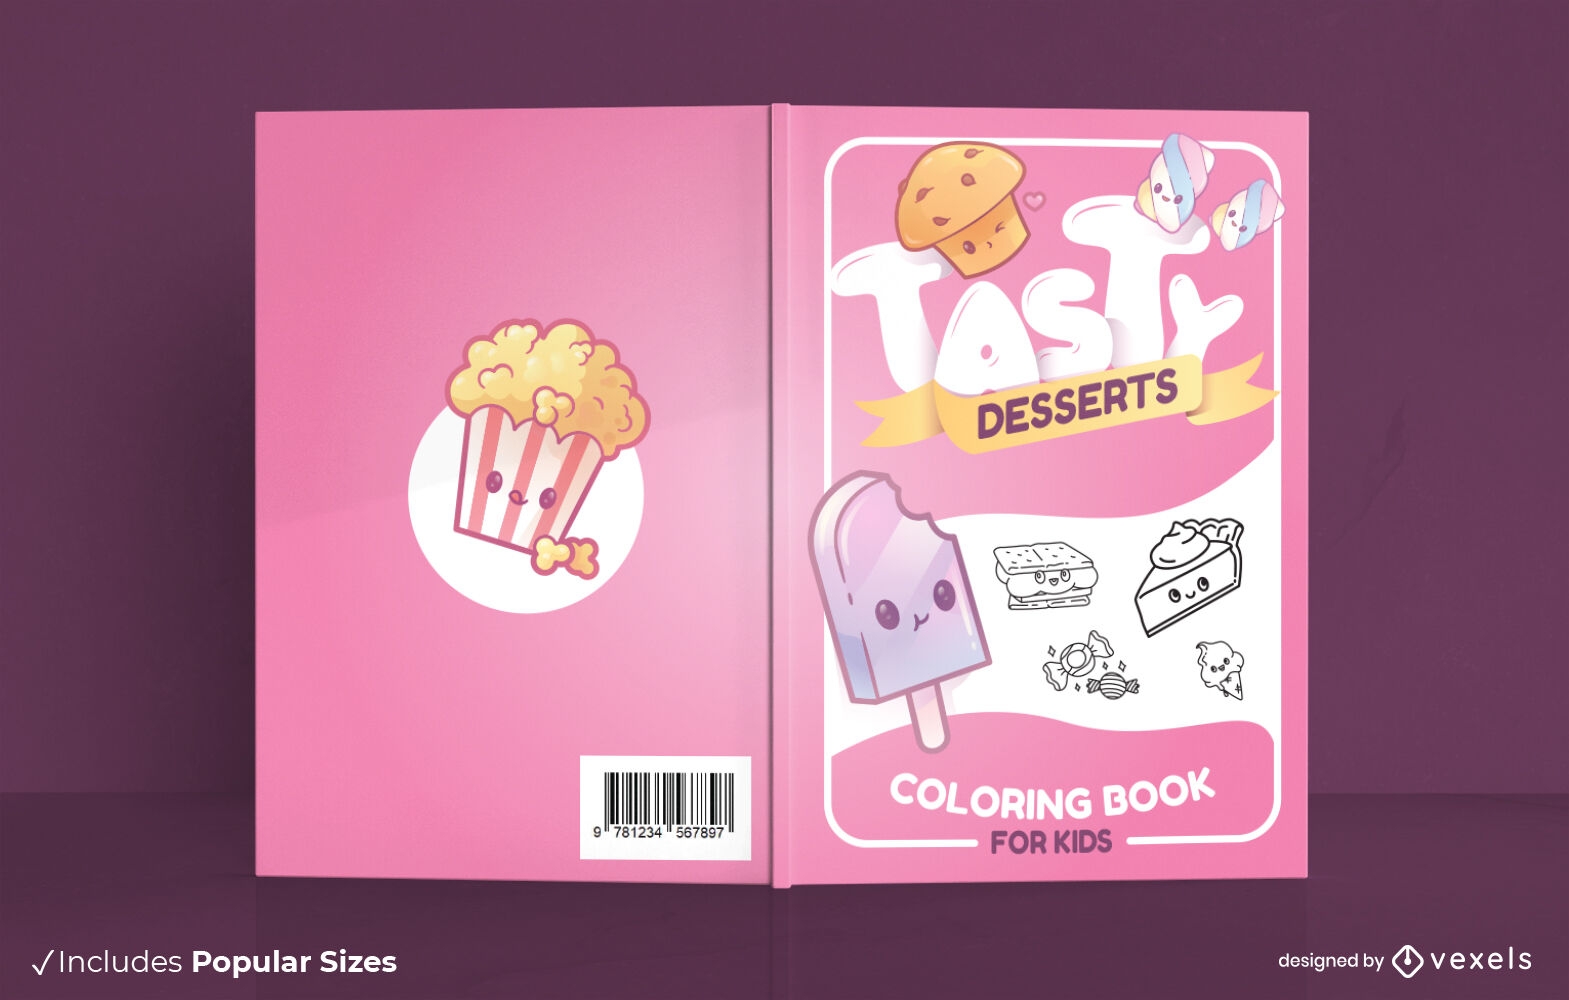 Tasty desserts Book cover design